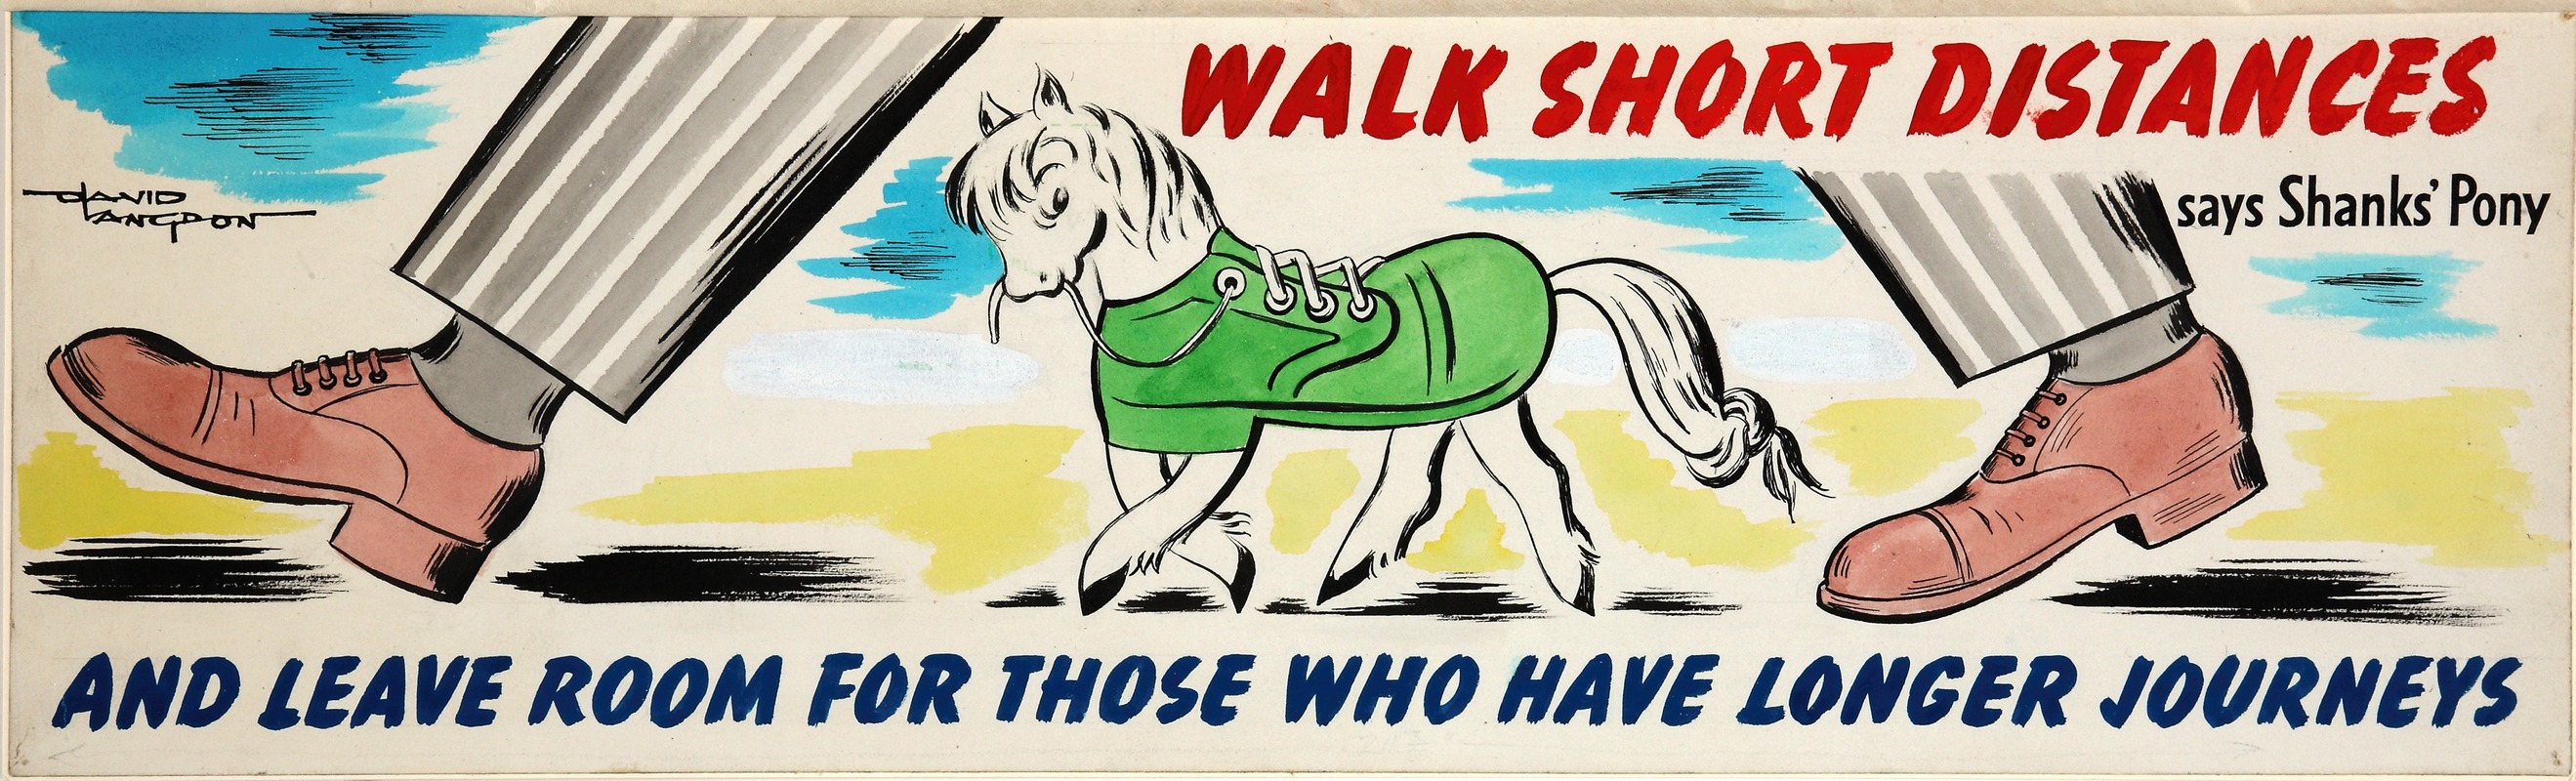 David Langdon - Walk short distances says Shanks’ Pony and leave room for those who have longer journeys